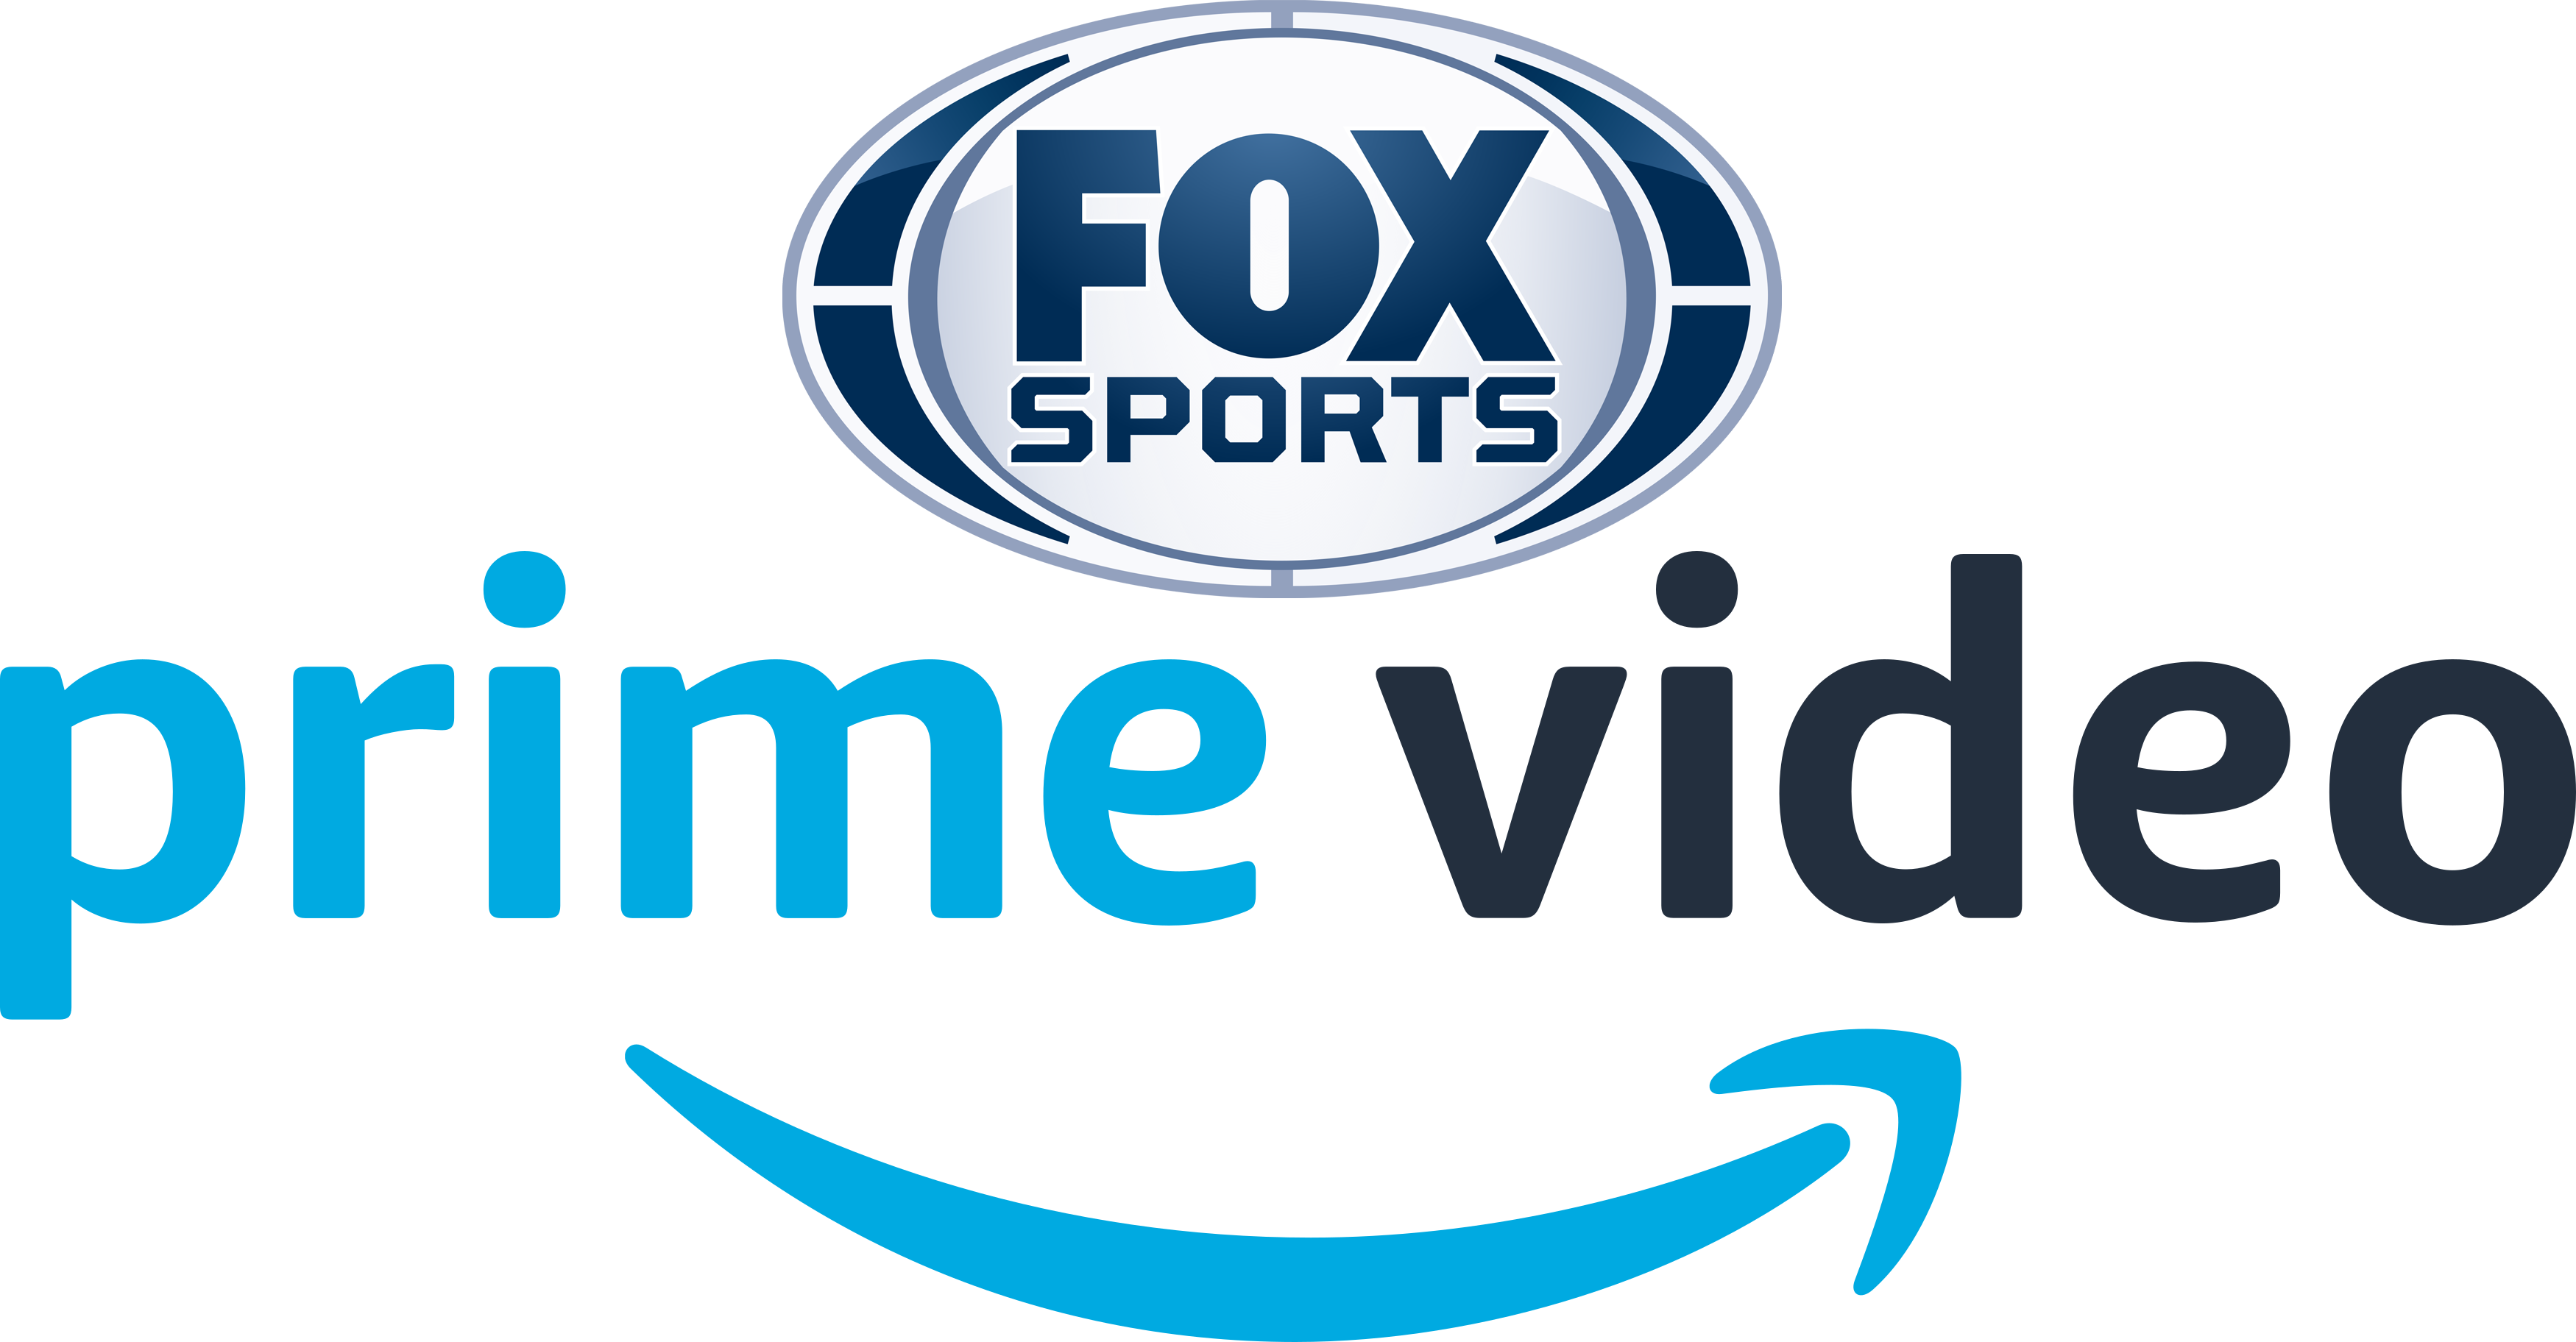 Fox Sports | Prime Video